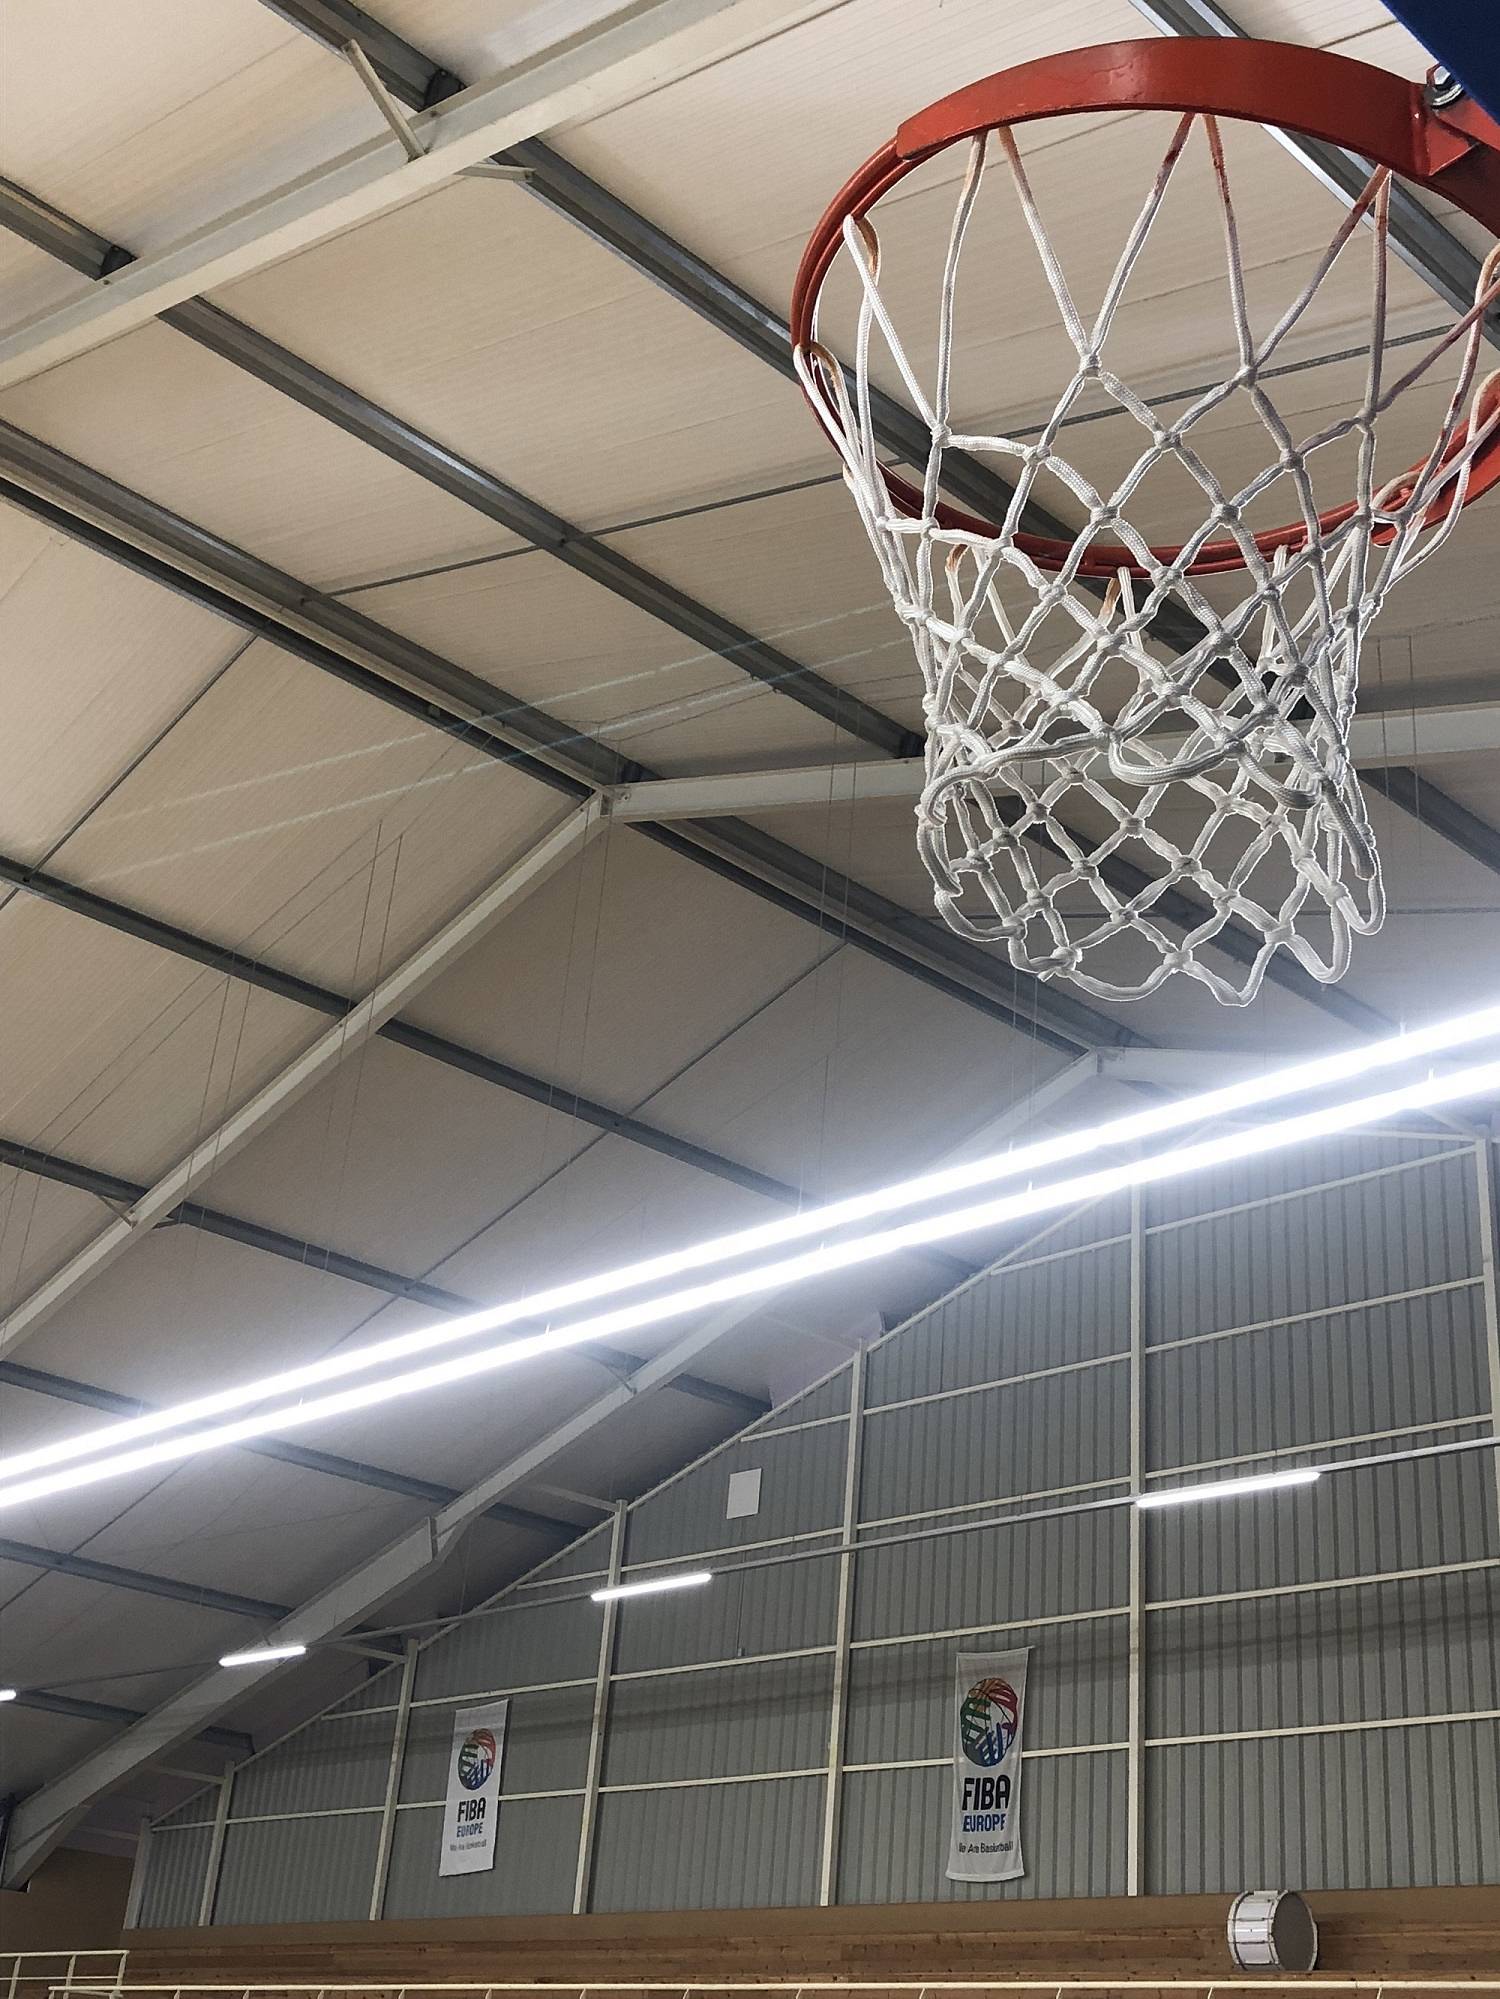 Basketbalclub Sint Katelijne Waver